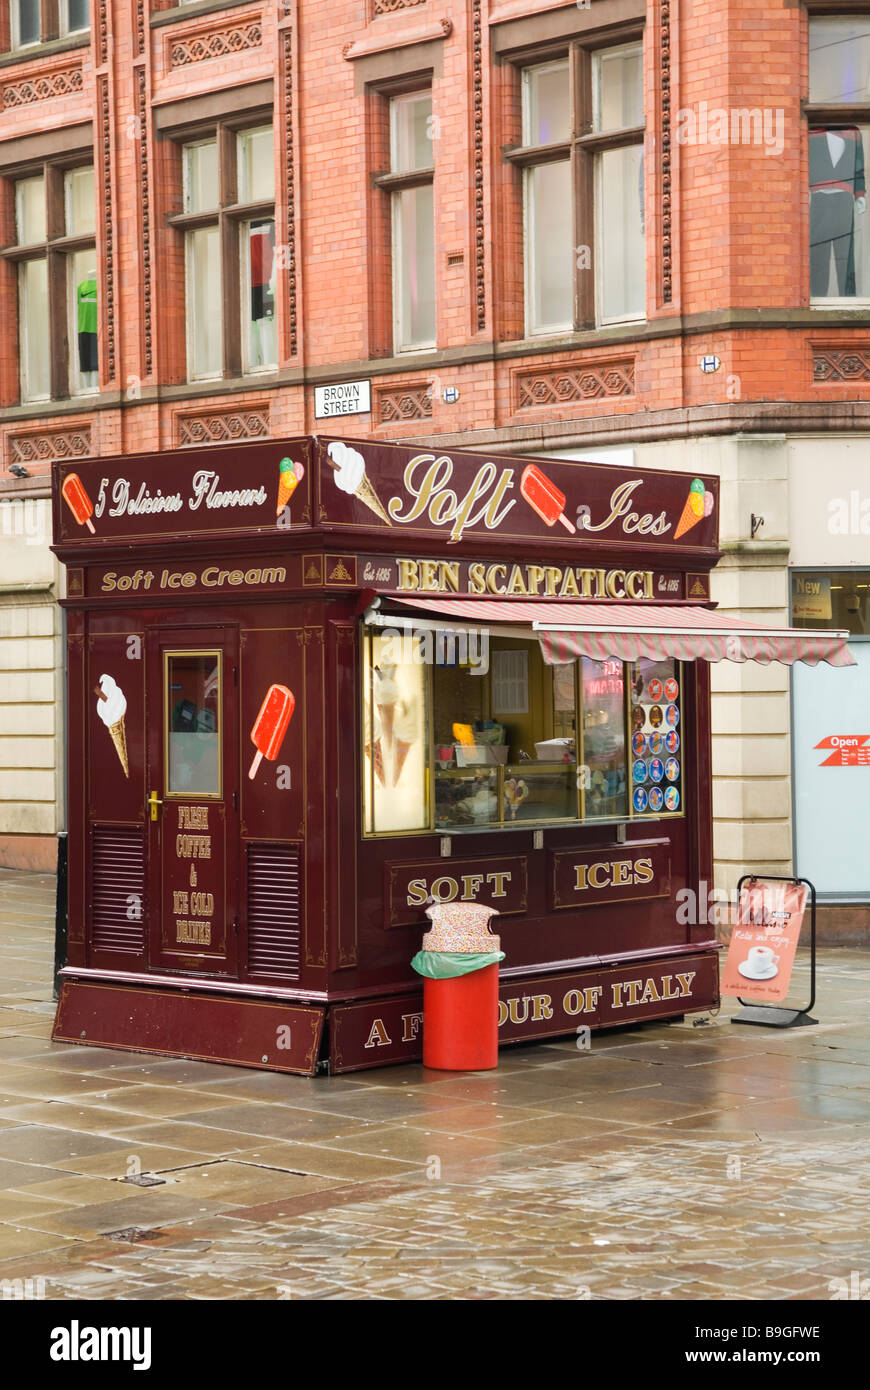 Ice cream booth on Market street Manchester city centre UK Stock Photo